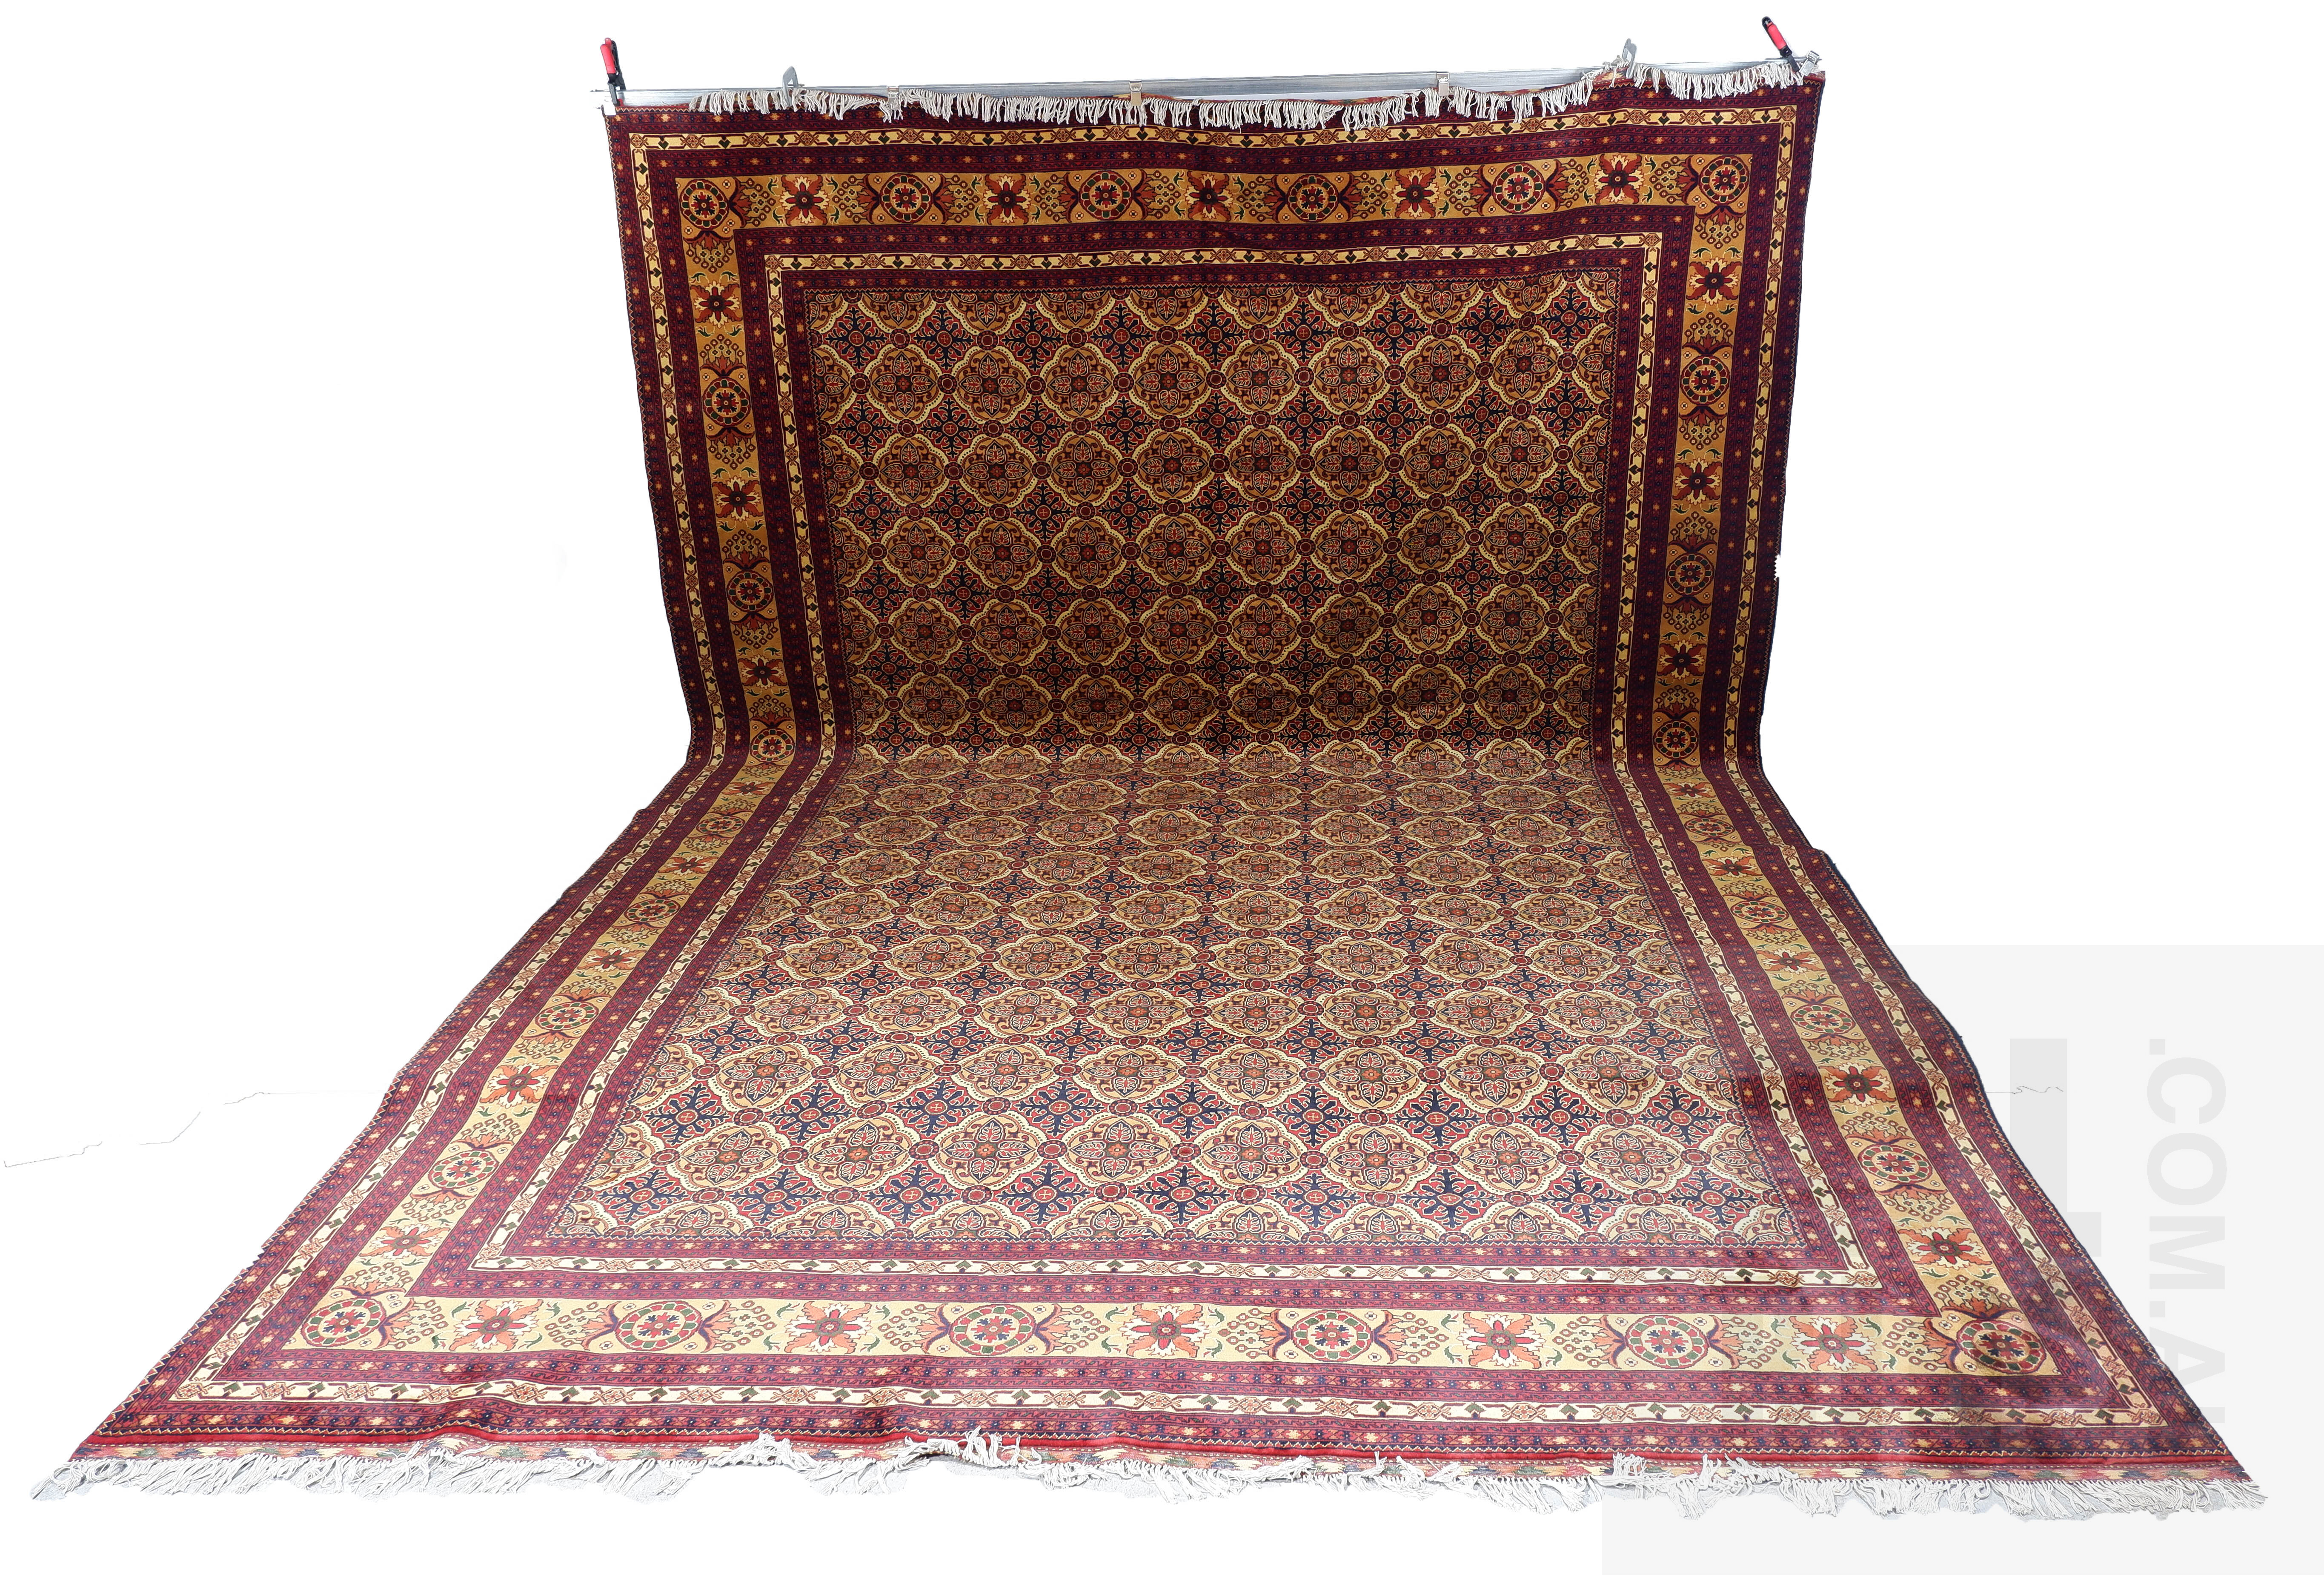 'Impressive Massive Persian Hand Knotted Wool Main Carpet with Mina Khani Design and Kilim Fringe Ends '